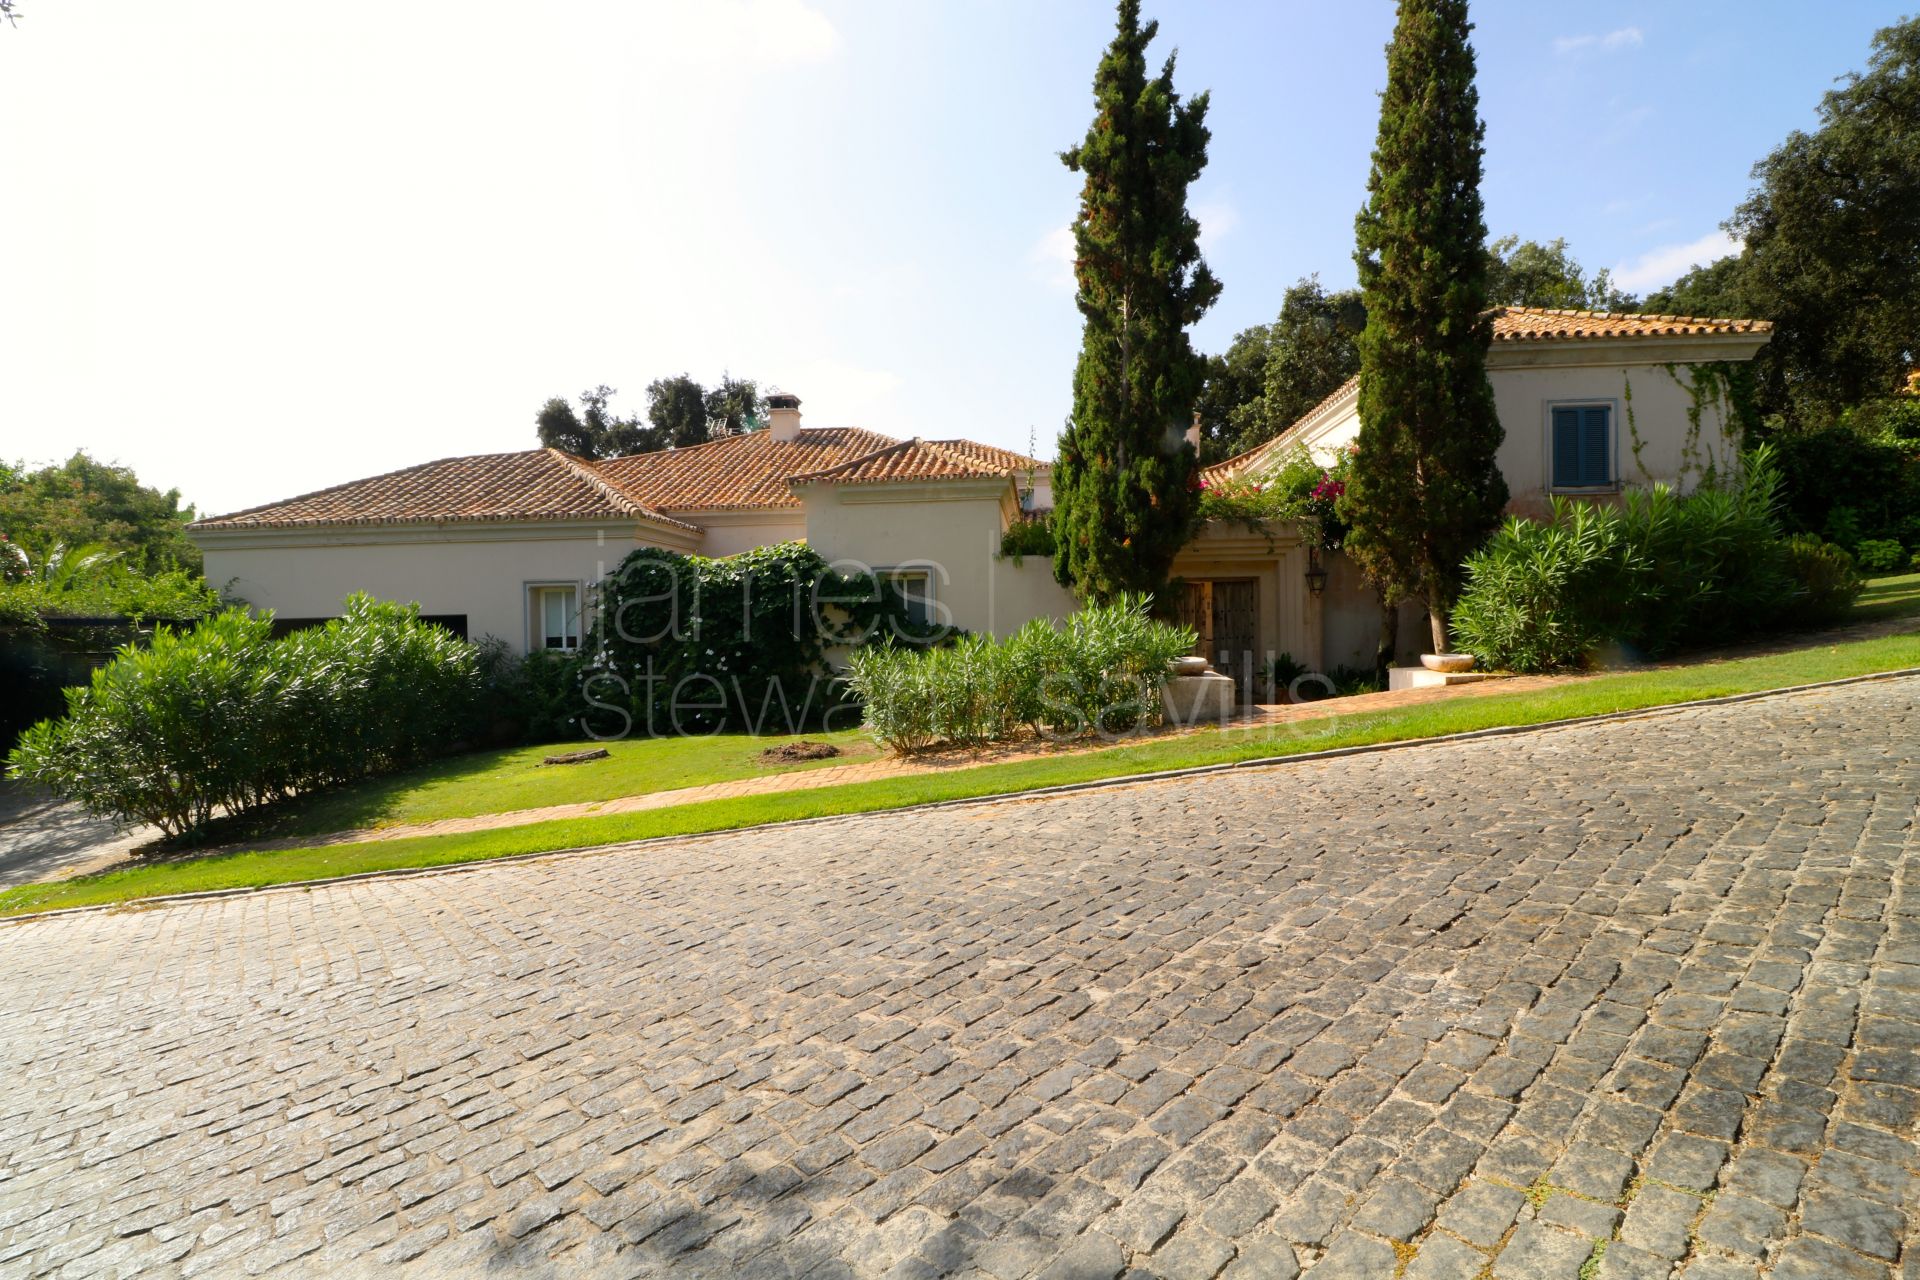 Lovely characterful villa in the gated Los Altos de Valderrama